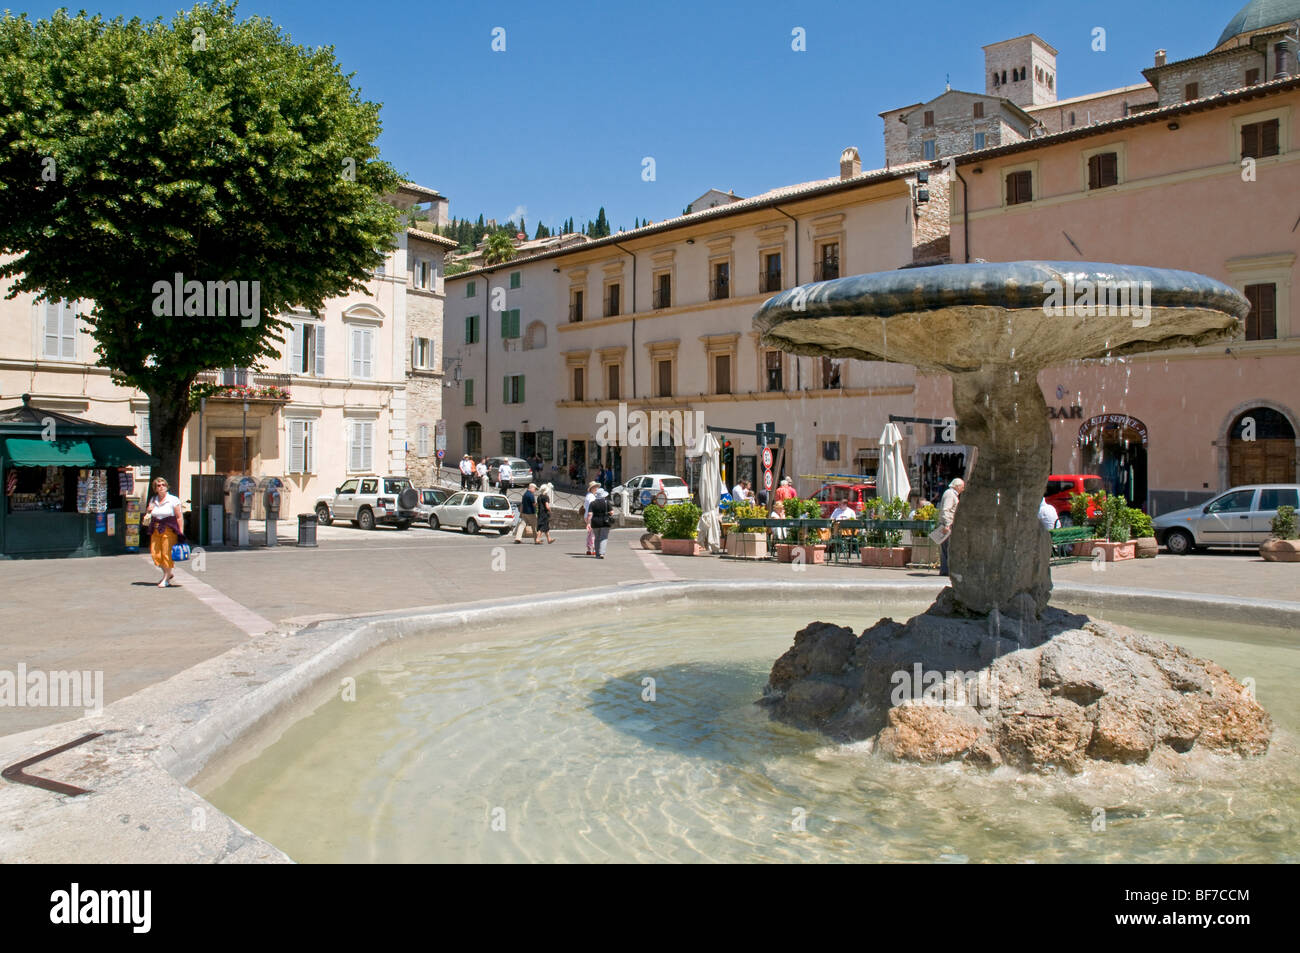 Piazza Santa Chiara, Assisi, Italy Stock Photo